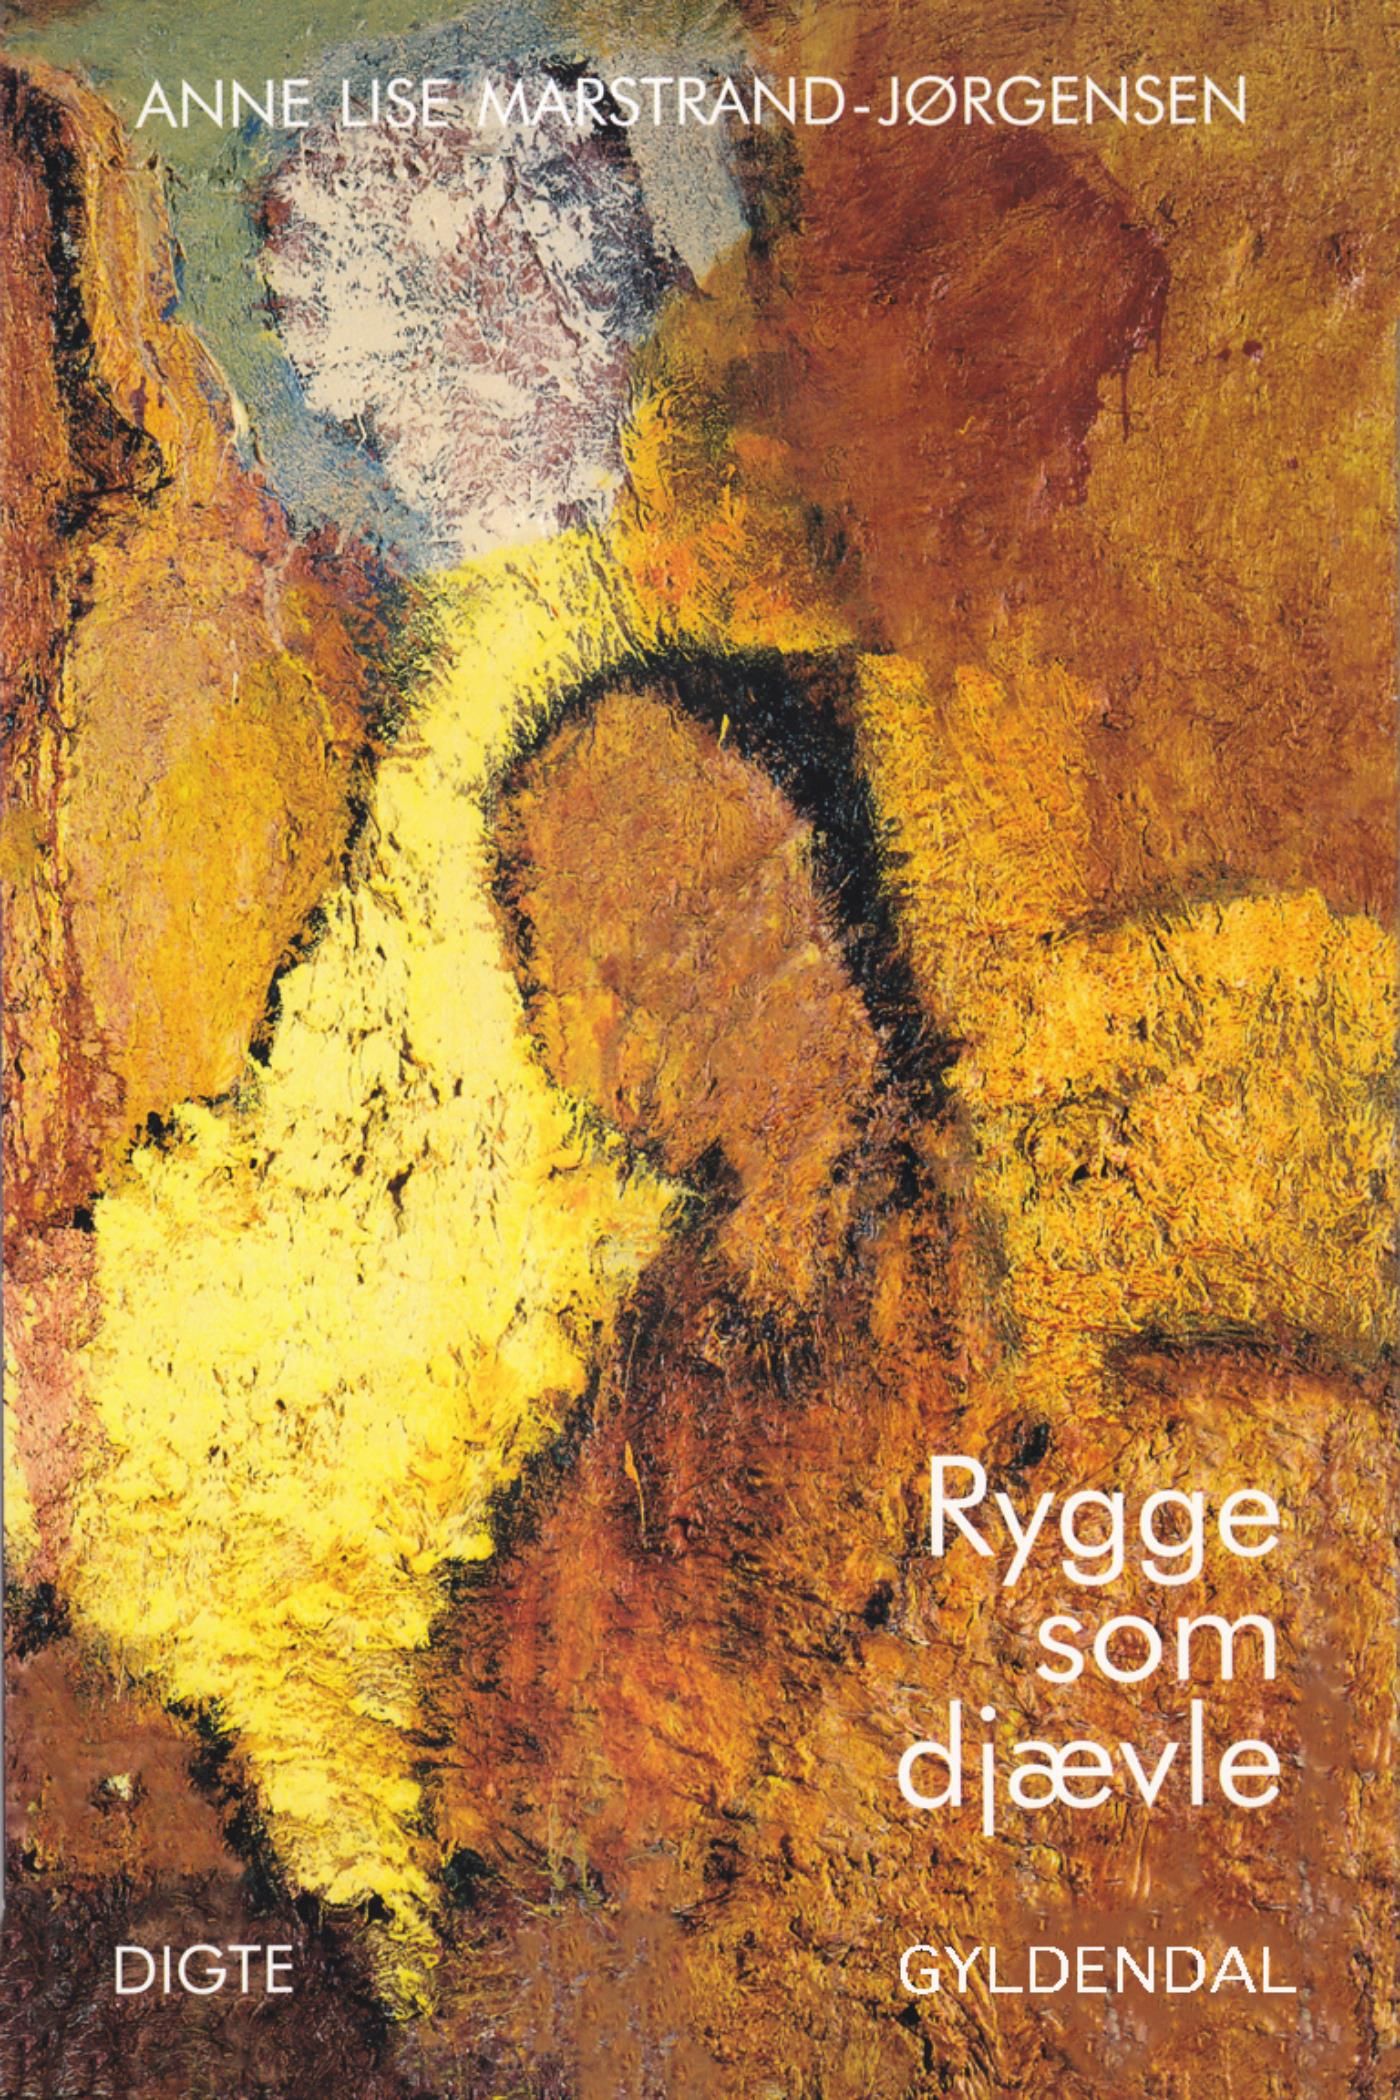 Rygge som djævle, e-bog af Anne Lise Marstrand-Jørgensen